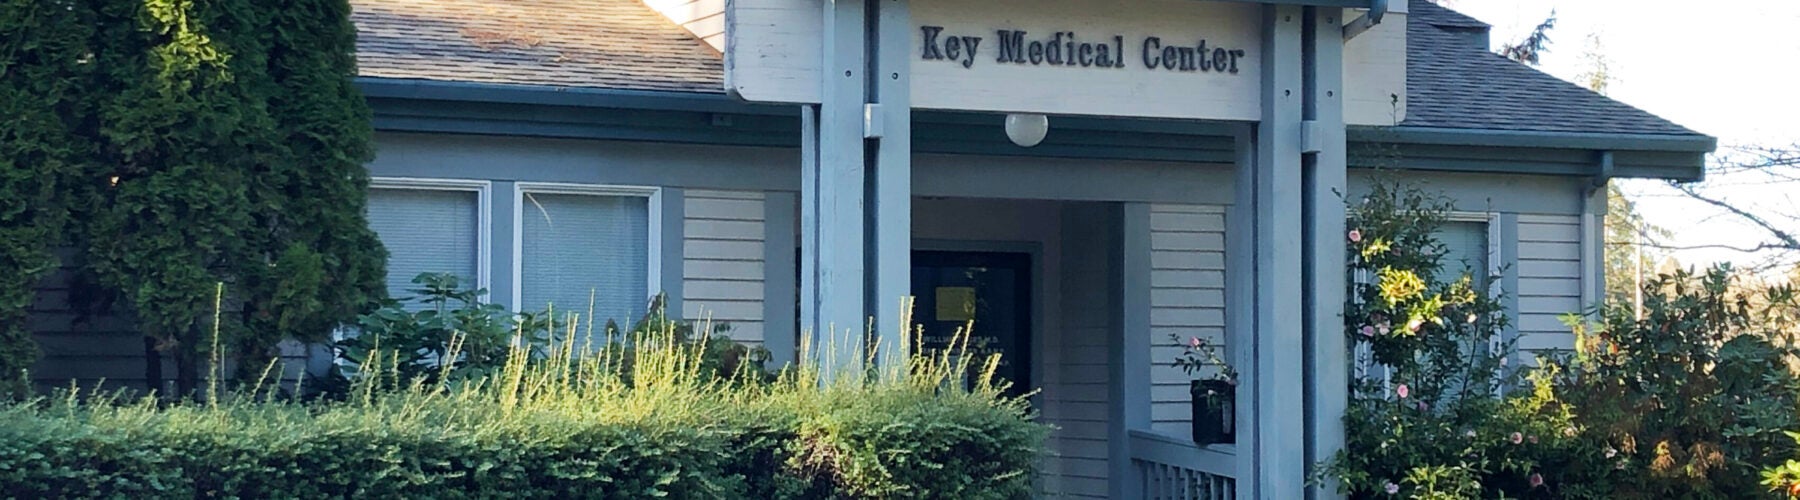 Key Medical Center 1